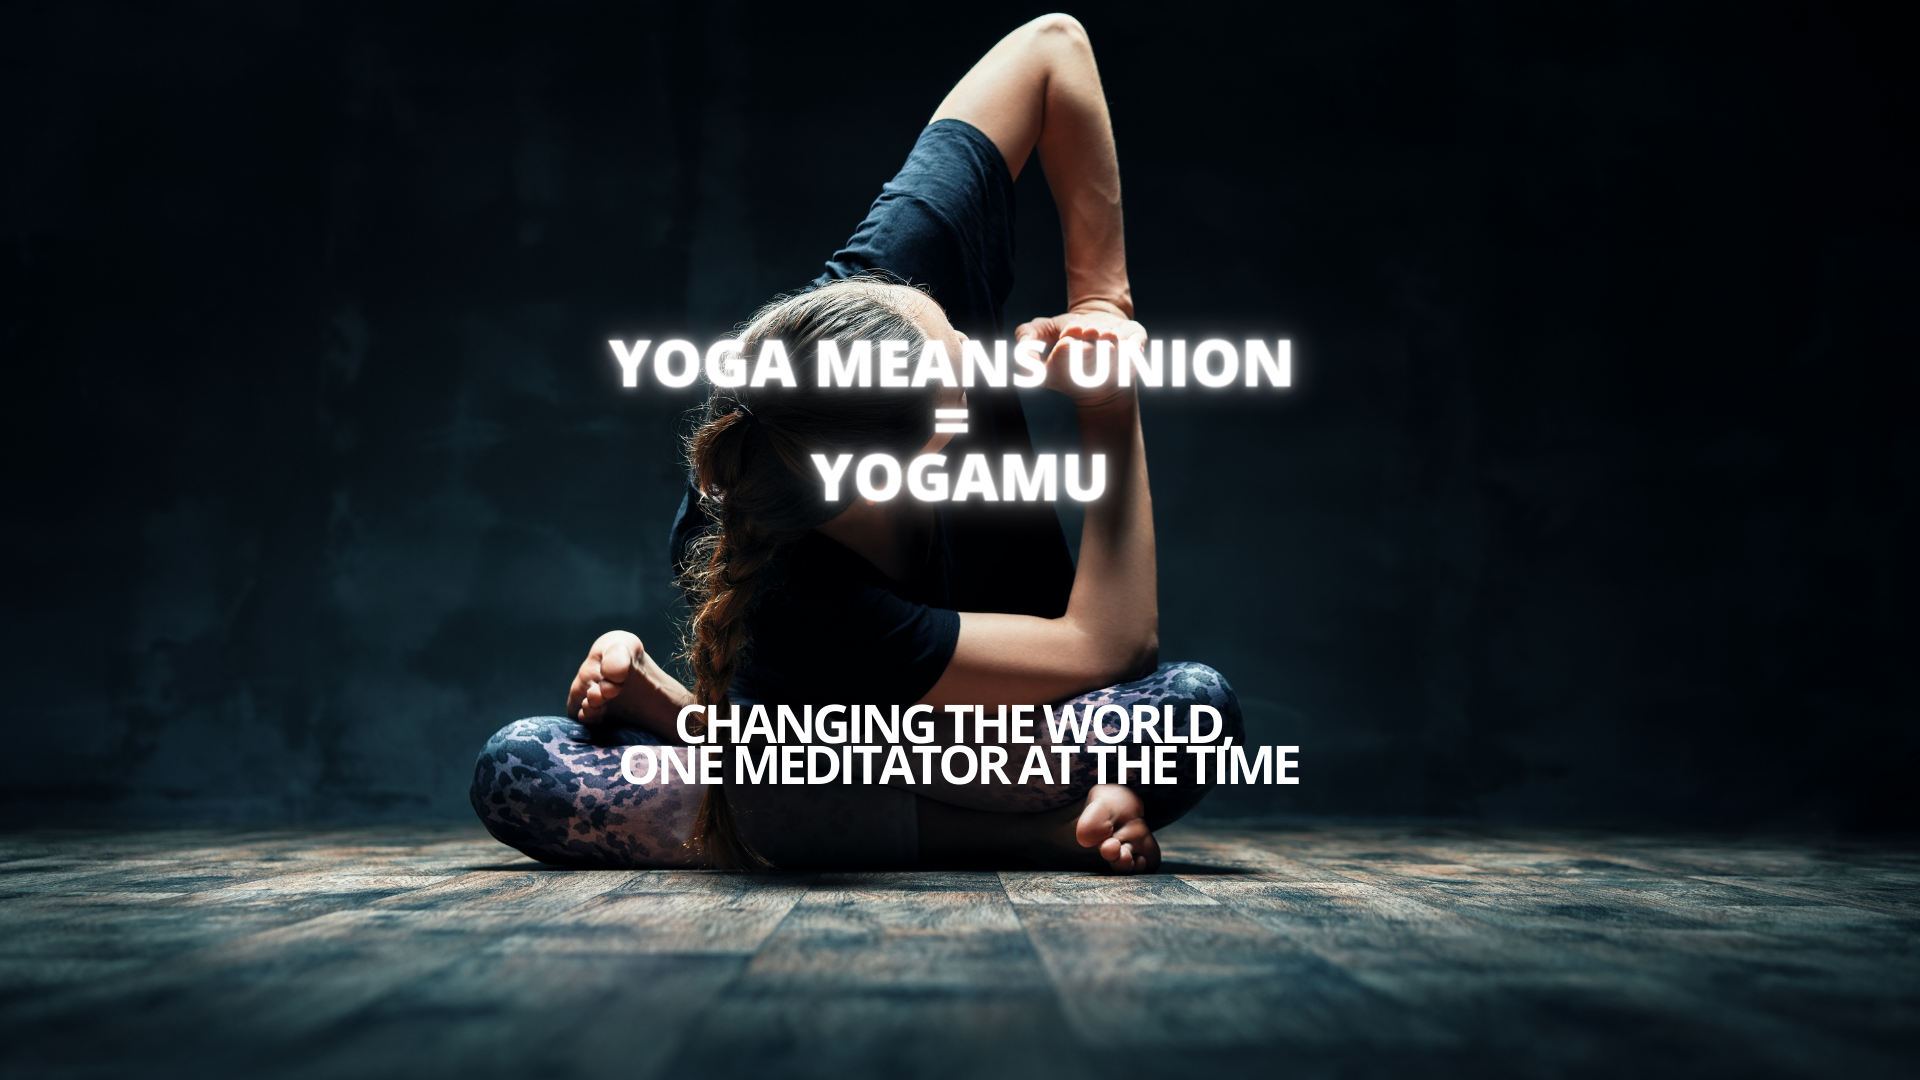 Yogini in a twist